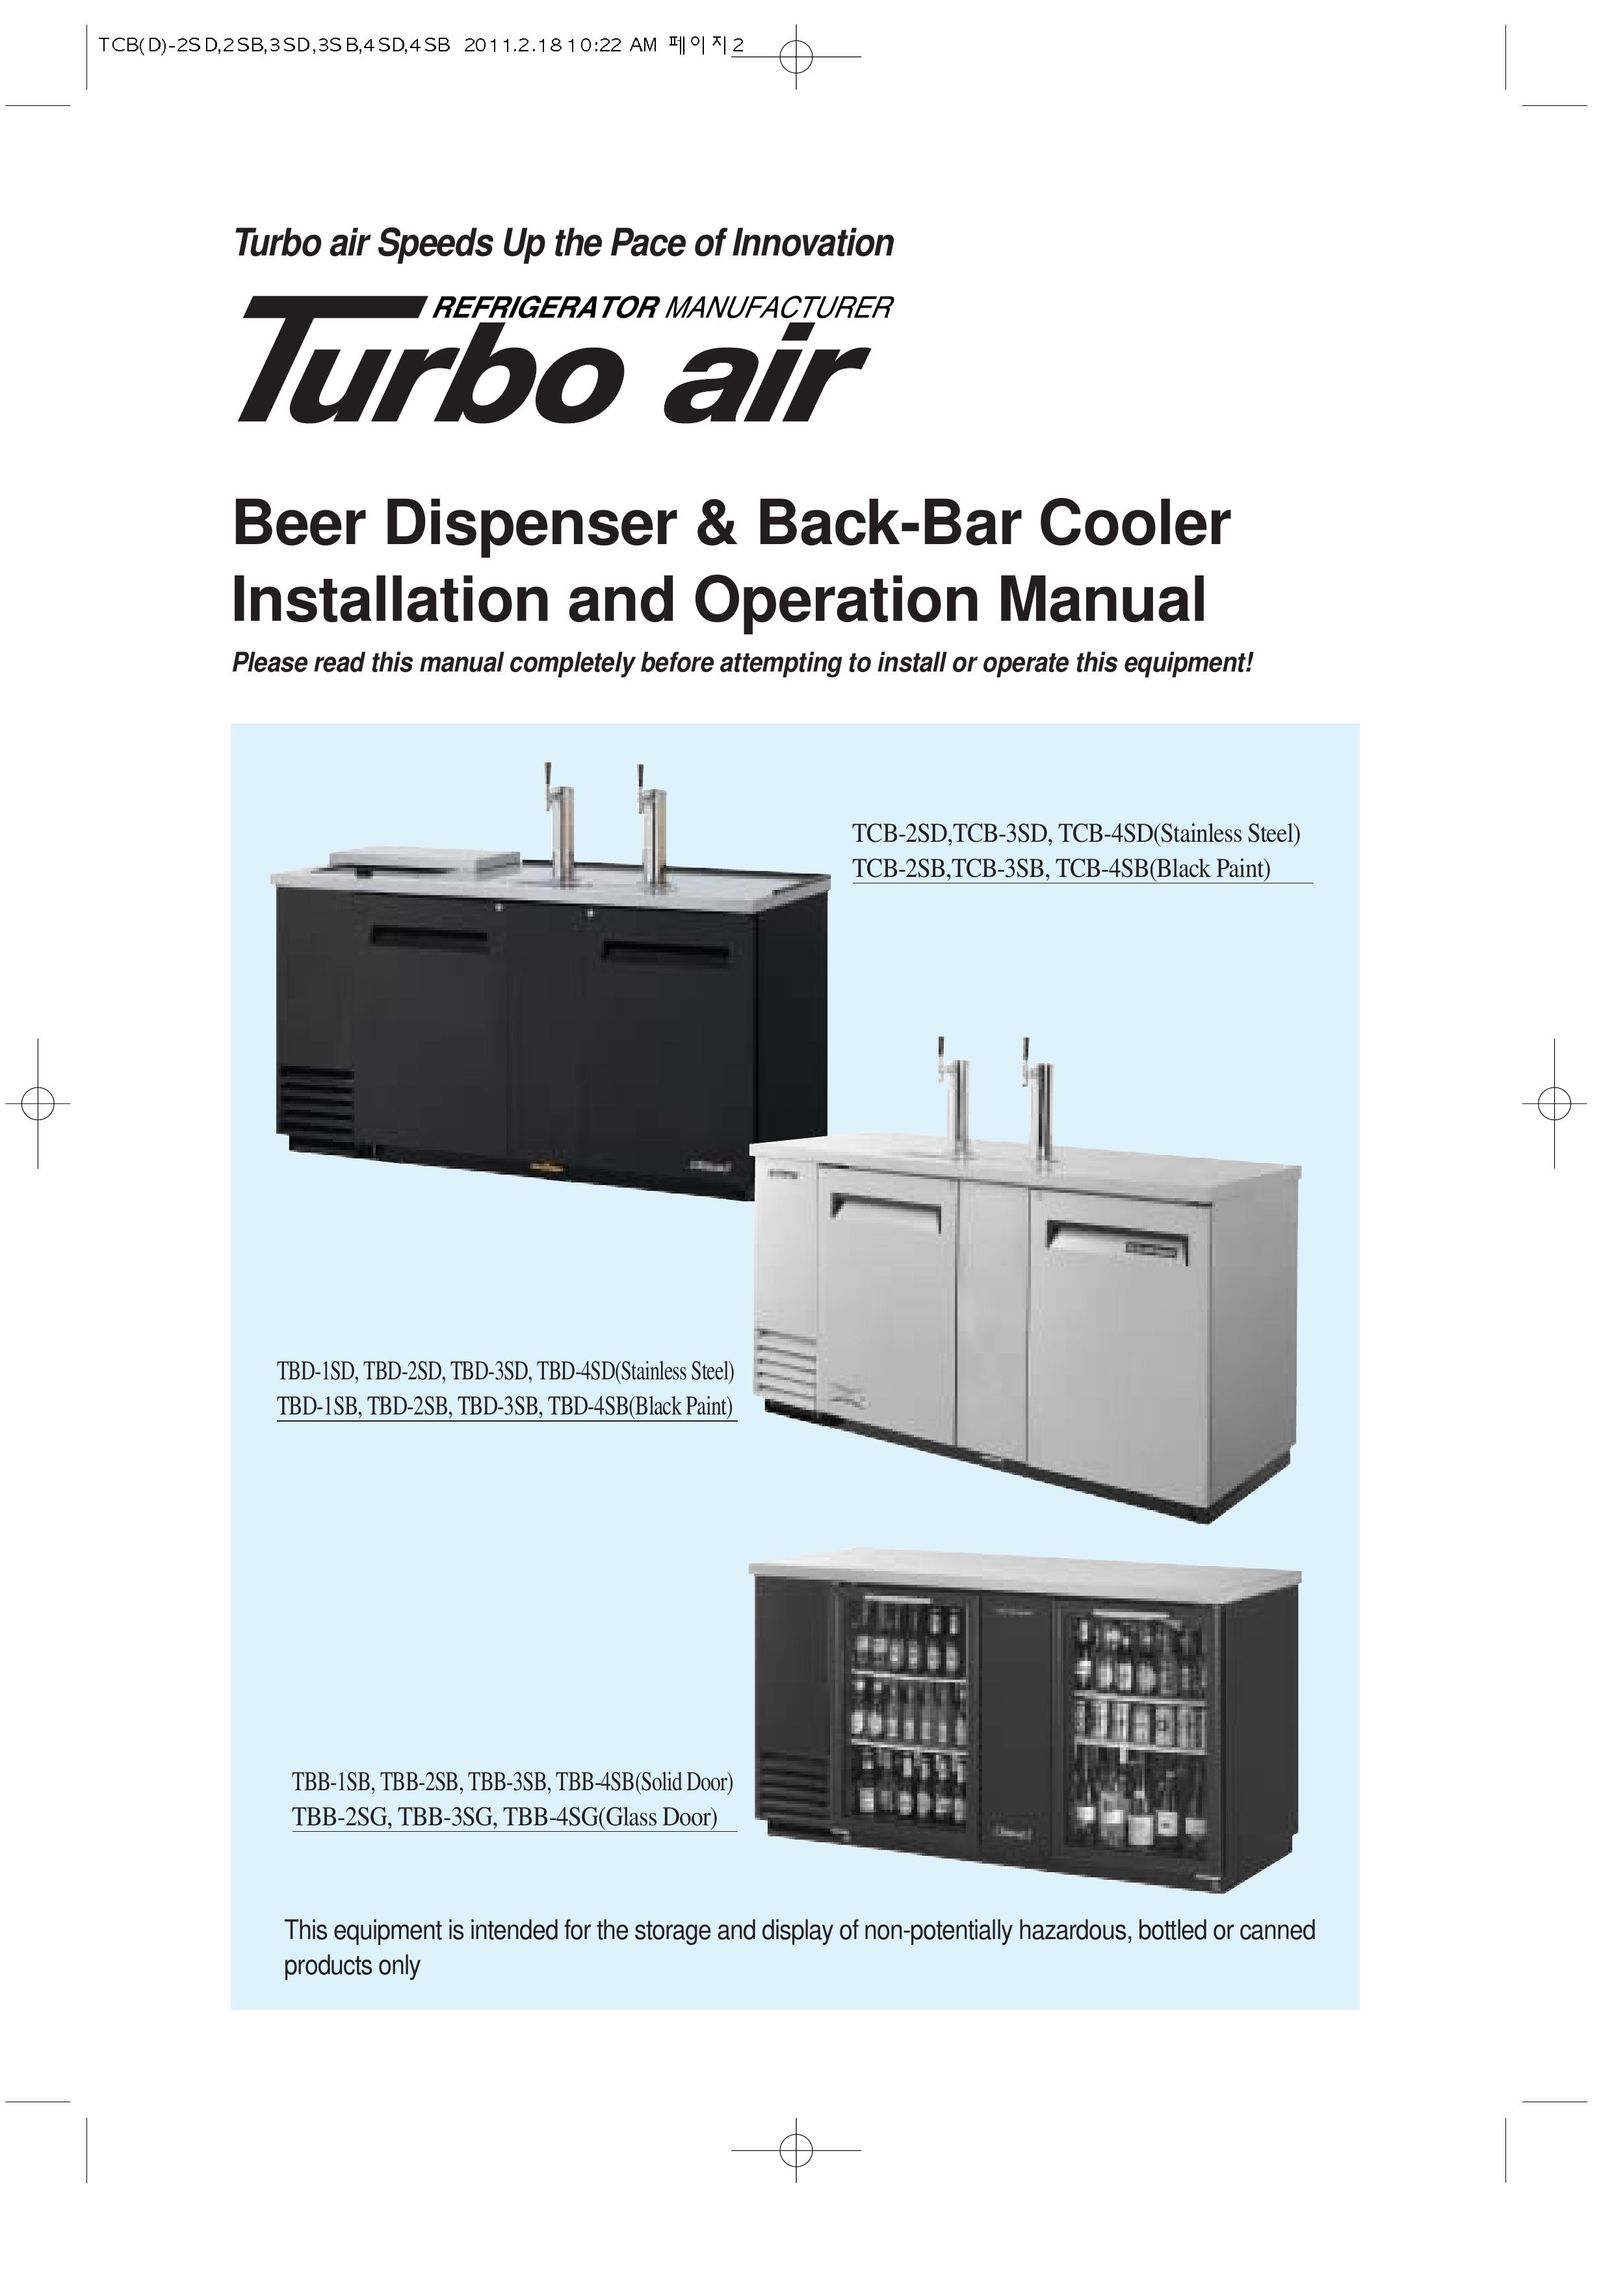 Turbo Air TCB-3SD Beverage Dispenser User Manual